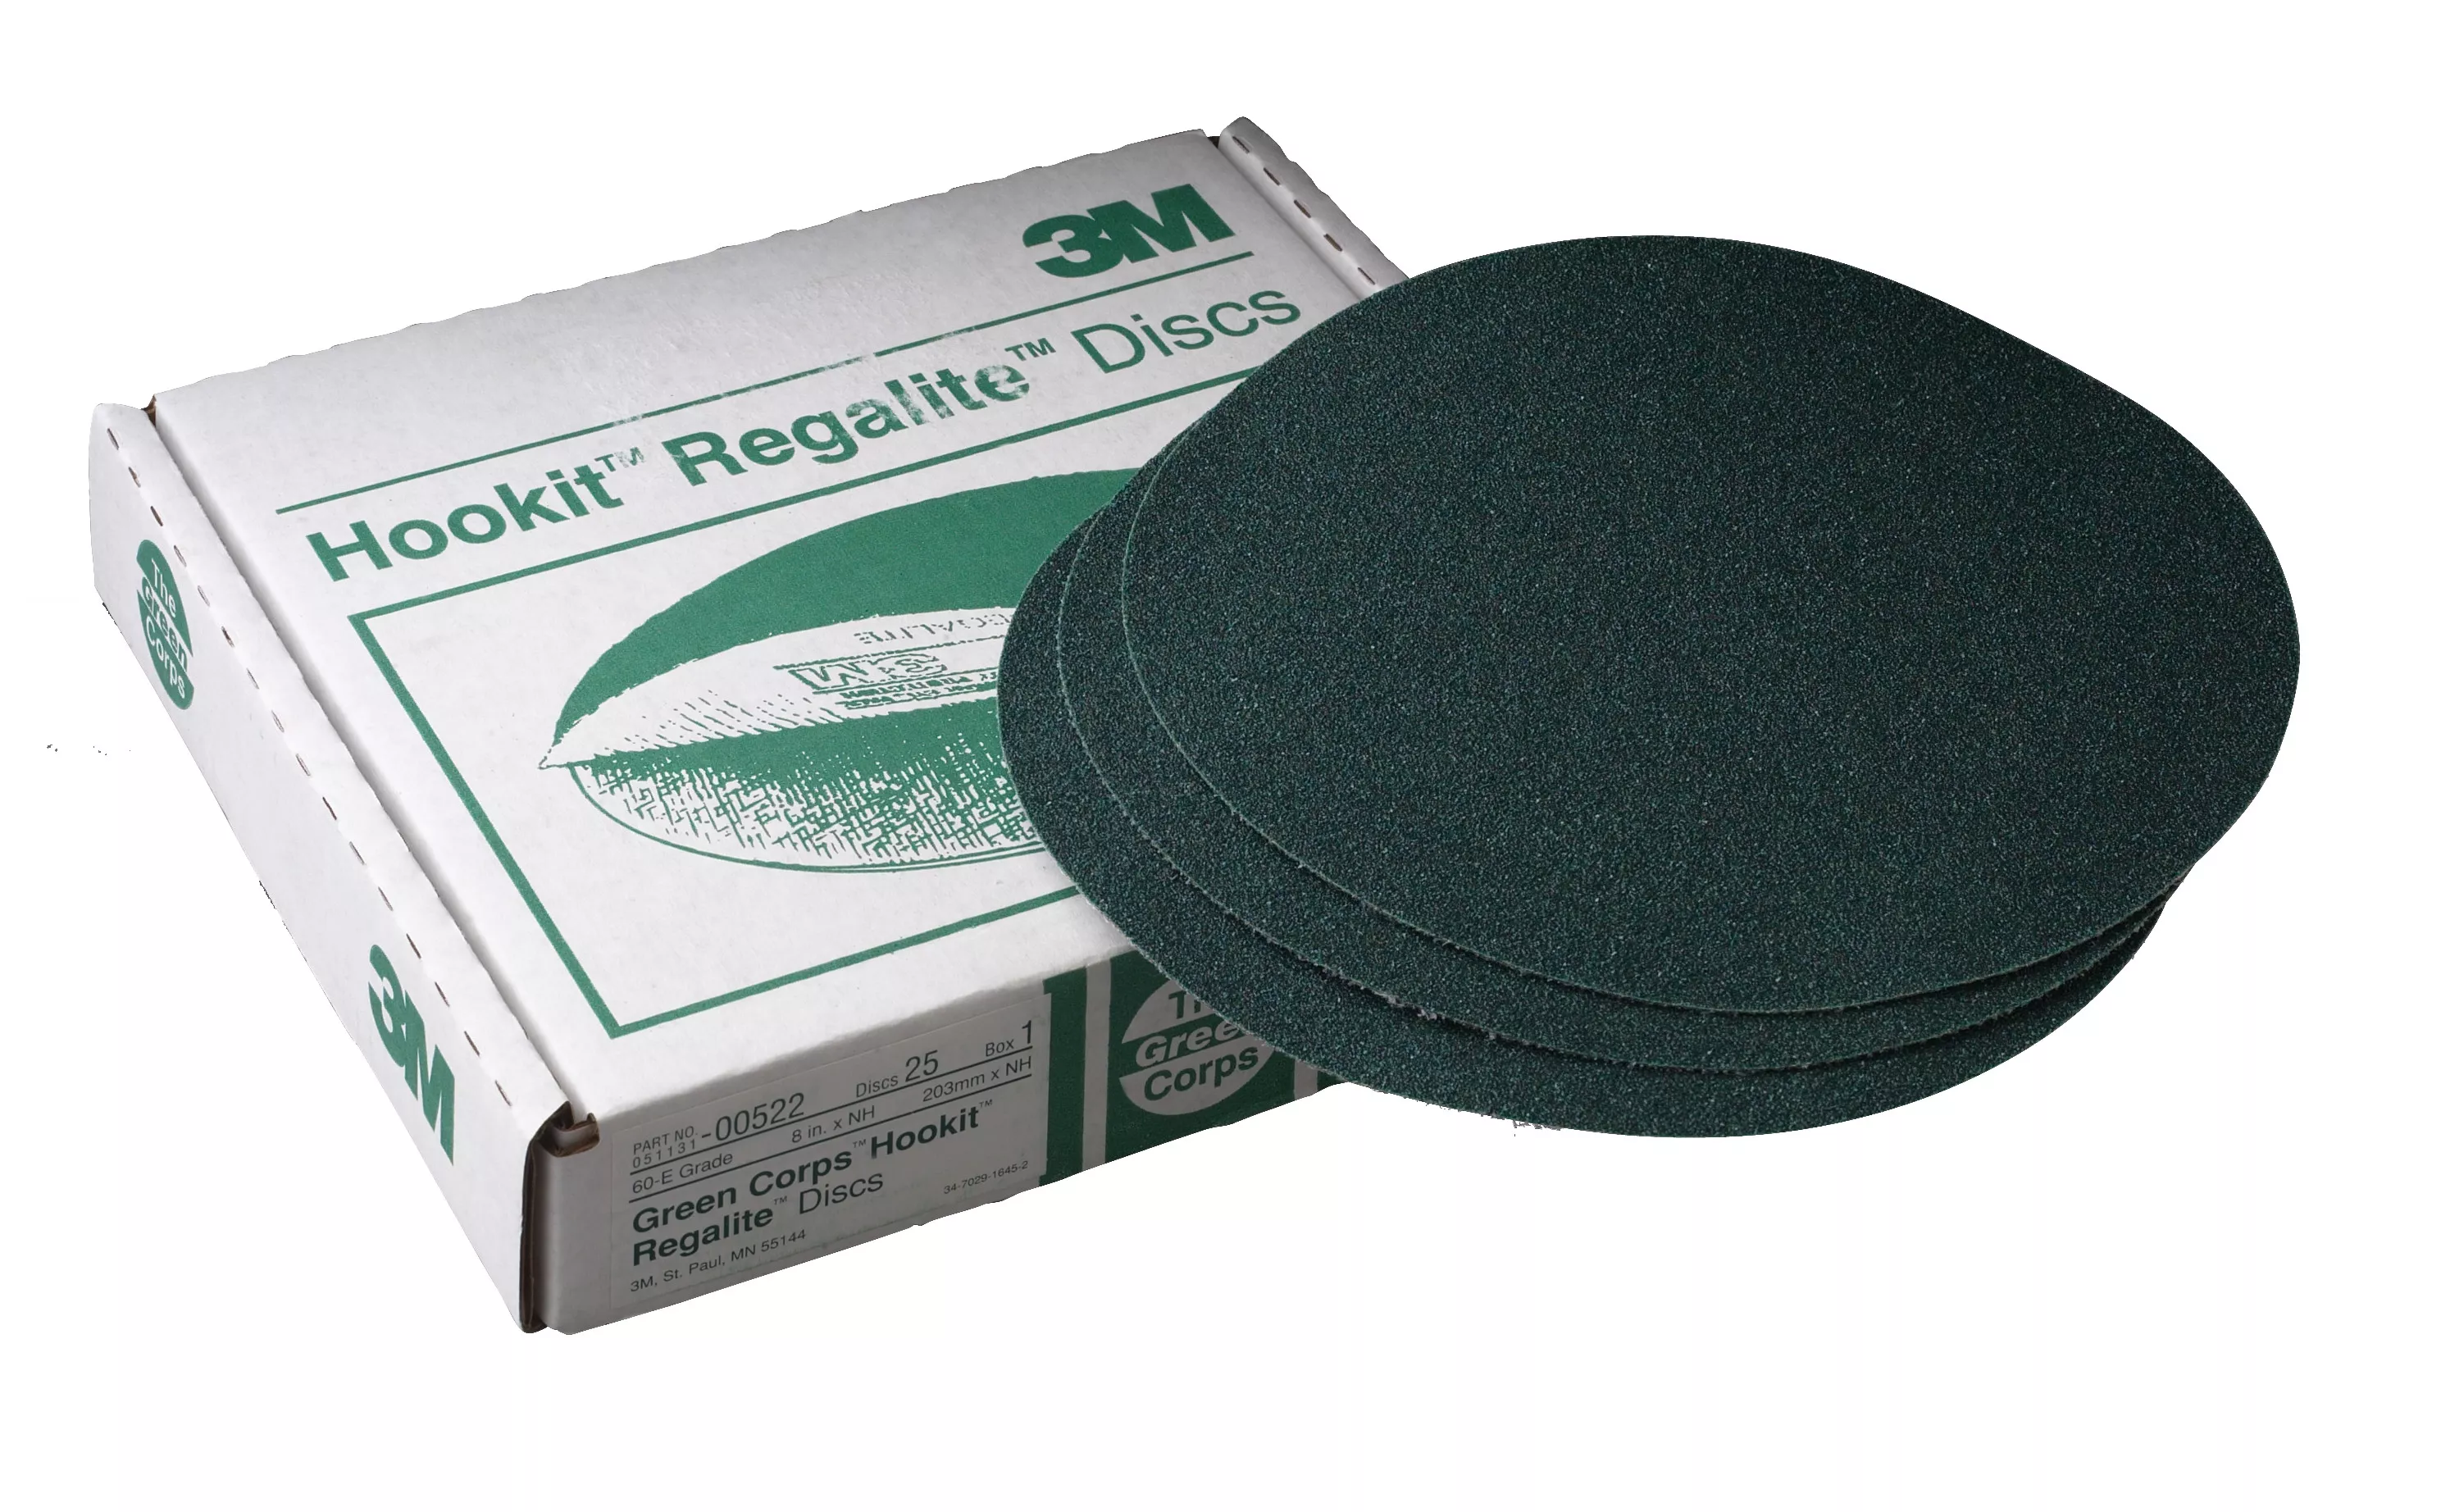 3M™ Green Corps™ Hookit™ Disc, 00522, 8 in, 60, 25 discs per carton, 5
cartons per case